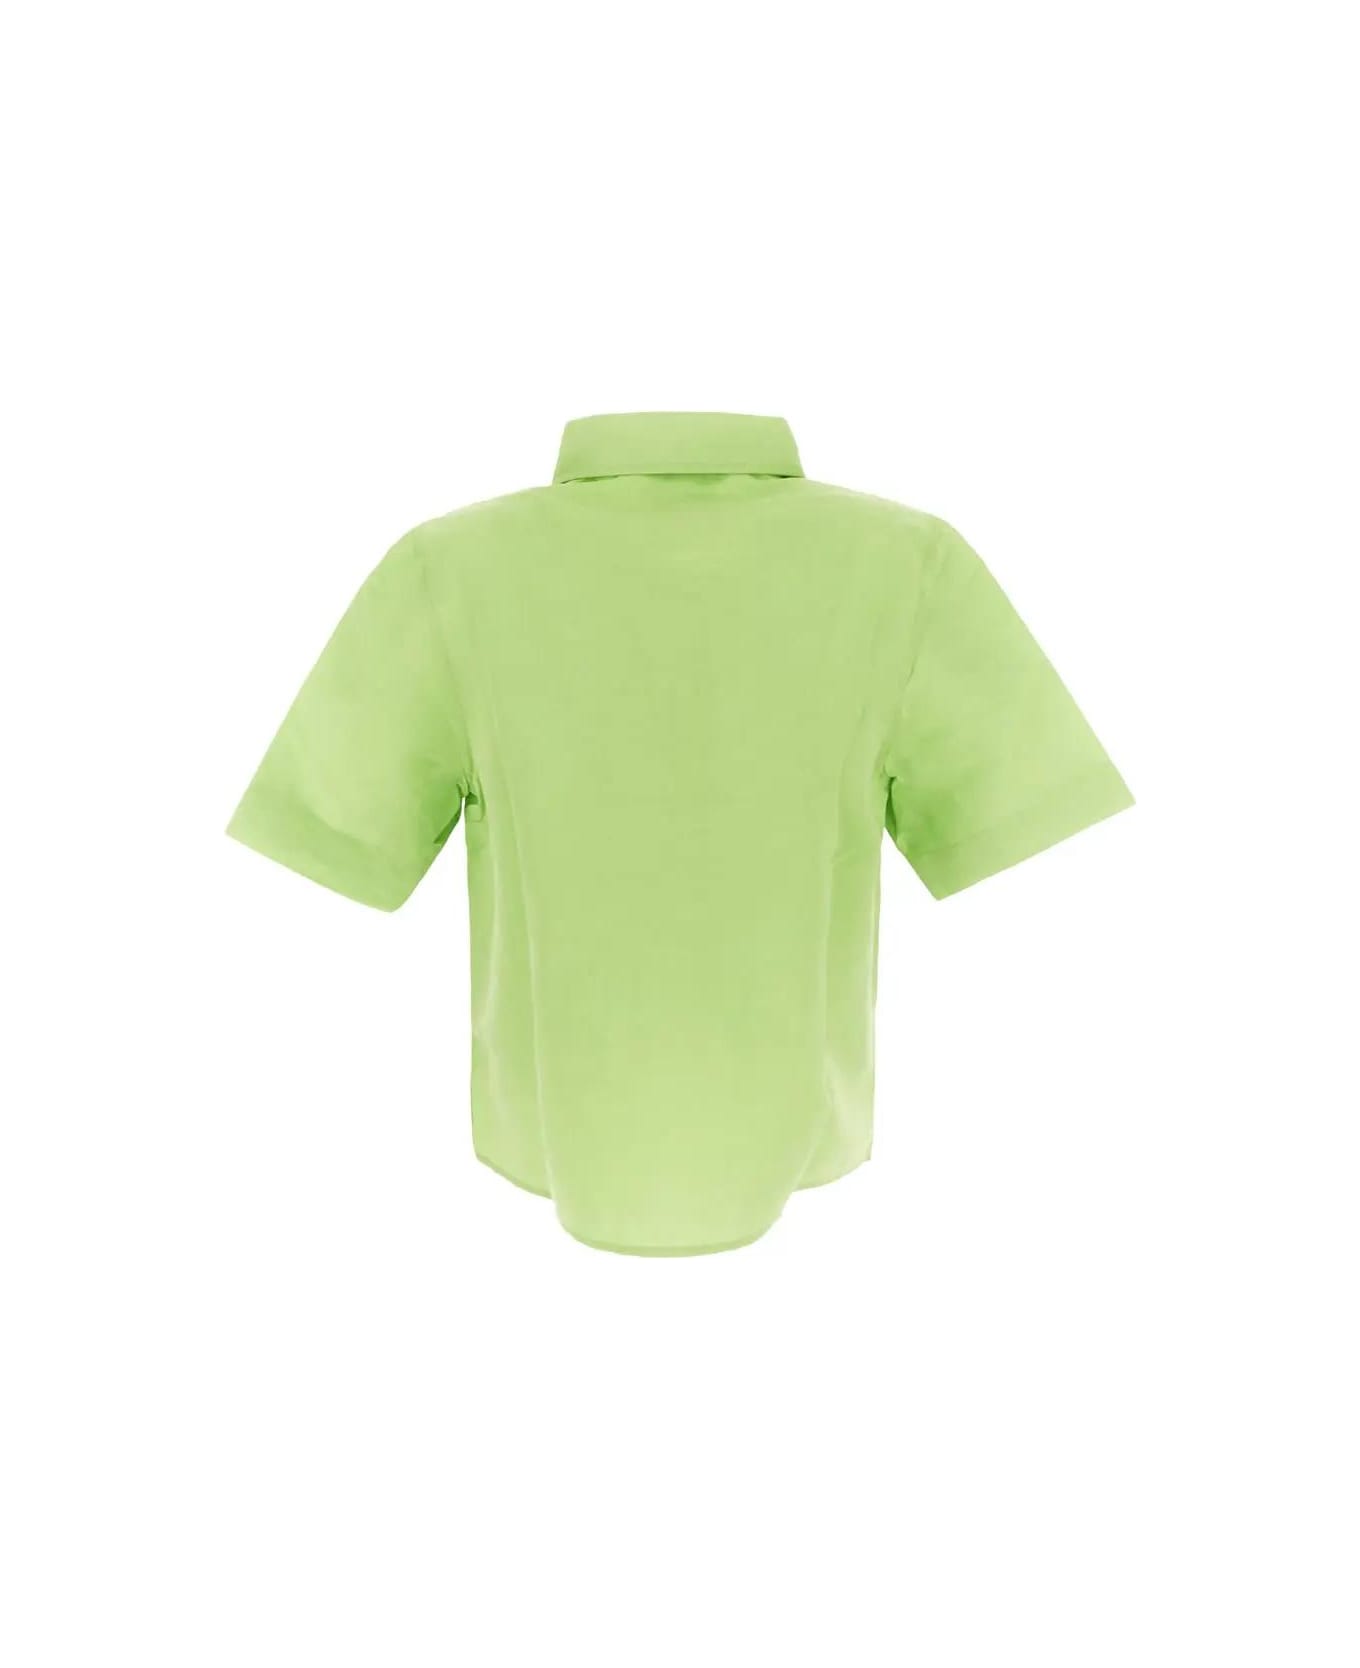 Lido Cropped Shirt - Lime シャツ